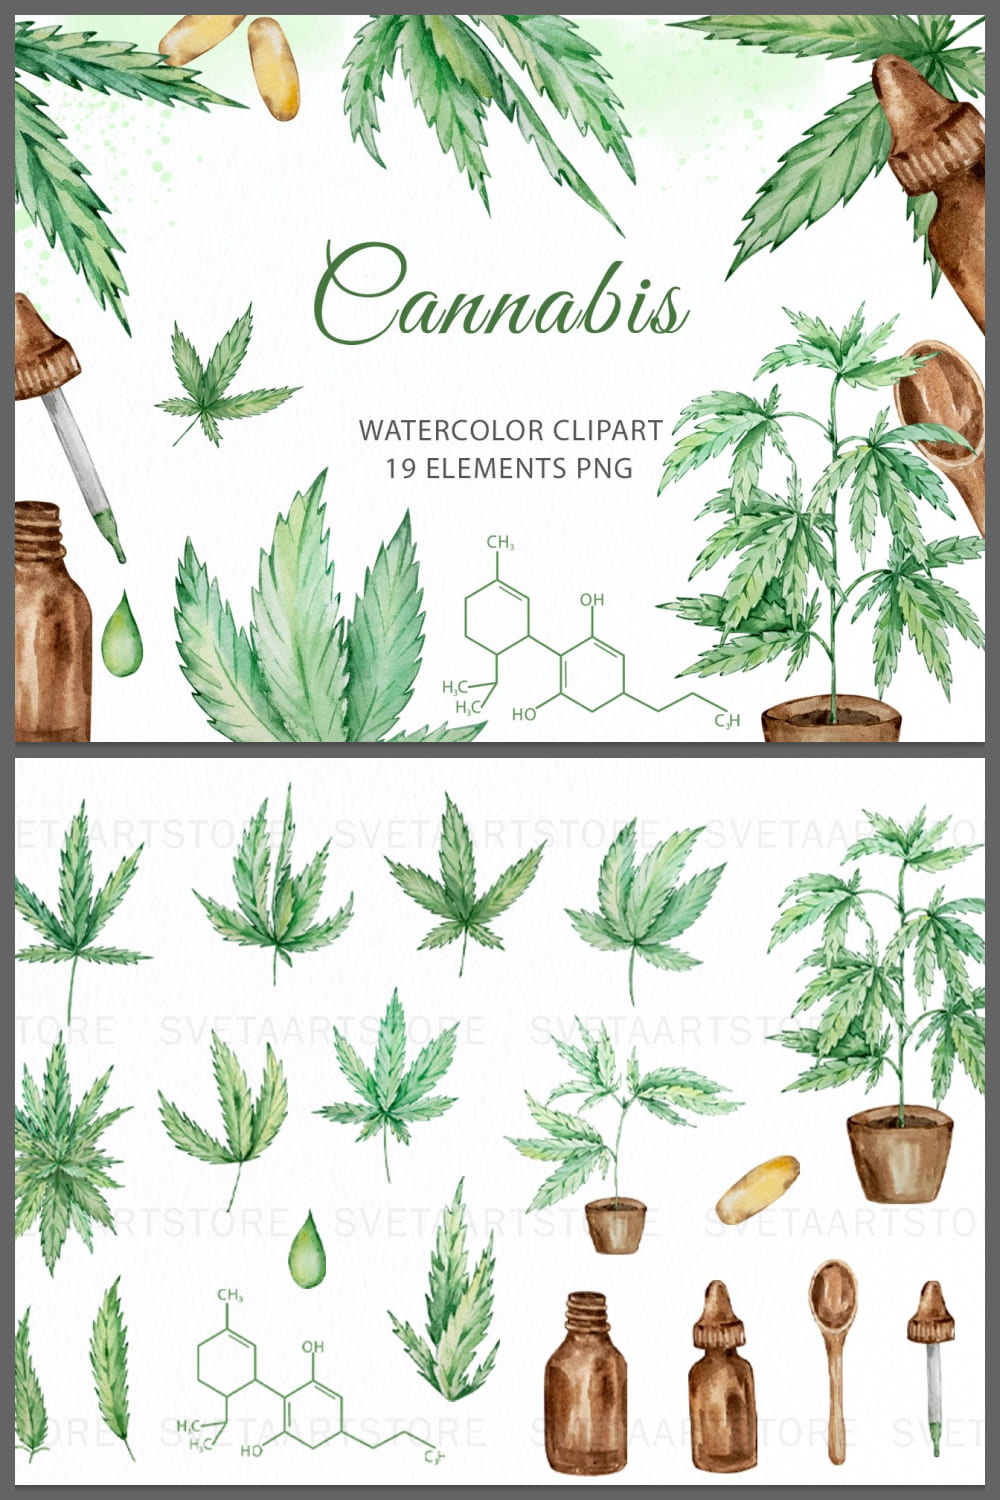 Watercolor cannabis hemp clipart - pinterest image preview.